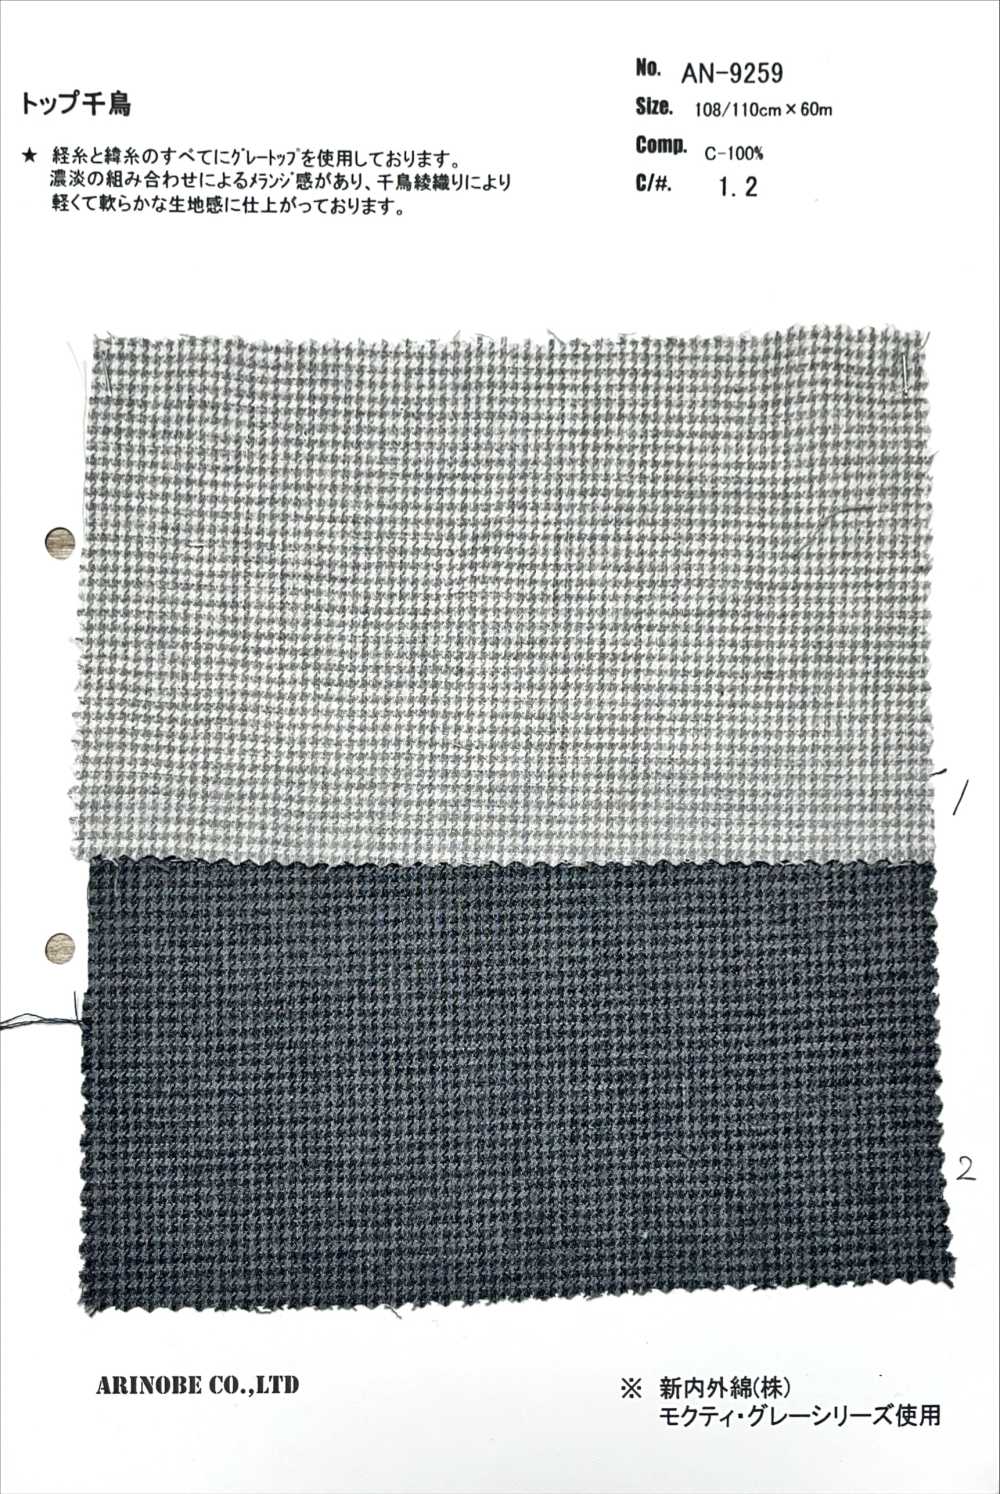 AN-9259 Top Houndstooth[Textile / Fabric] ARINOBE CO., LTD.